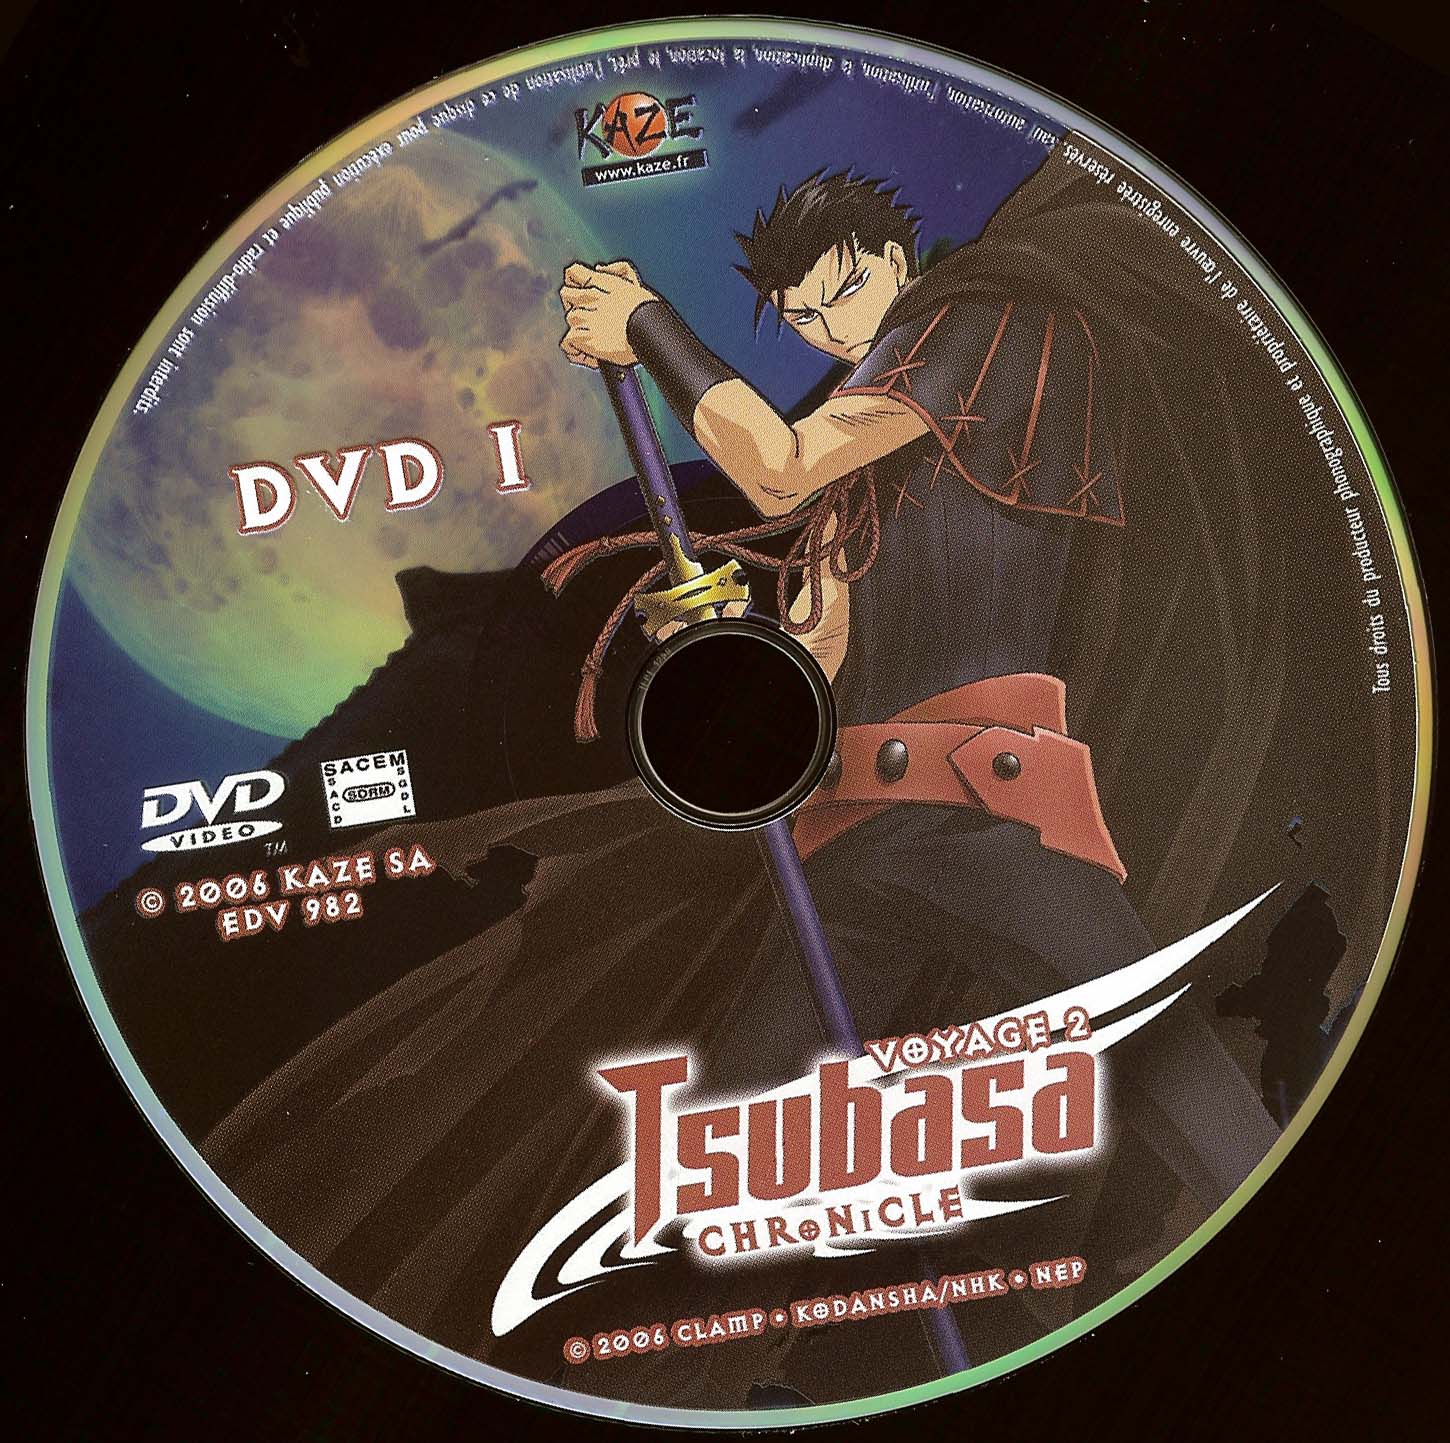 Tsubasa chronicle - voyage 2 - DVD 1